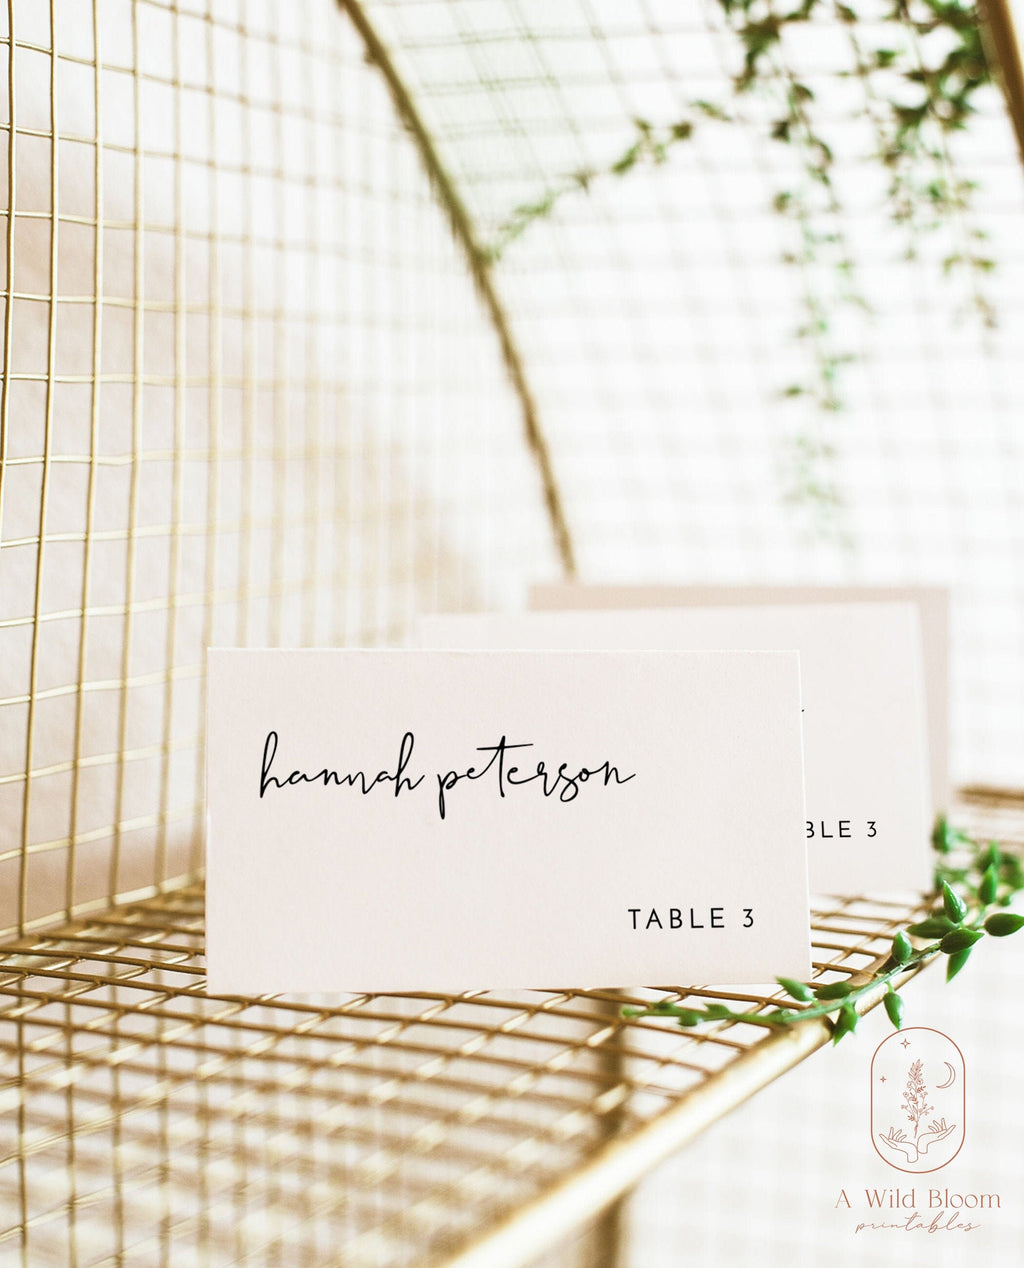 Free customizable wedding place cards templates